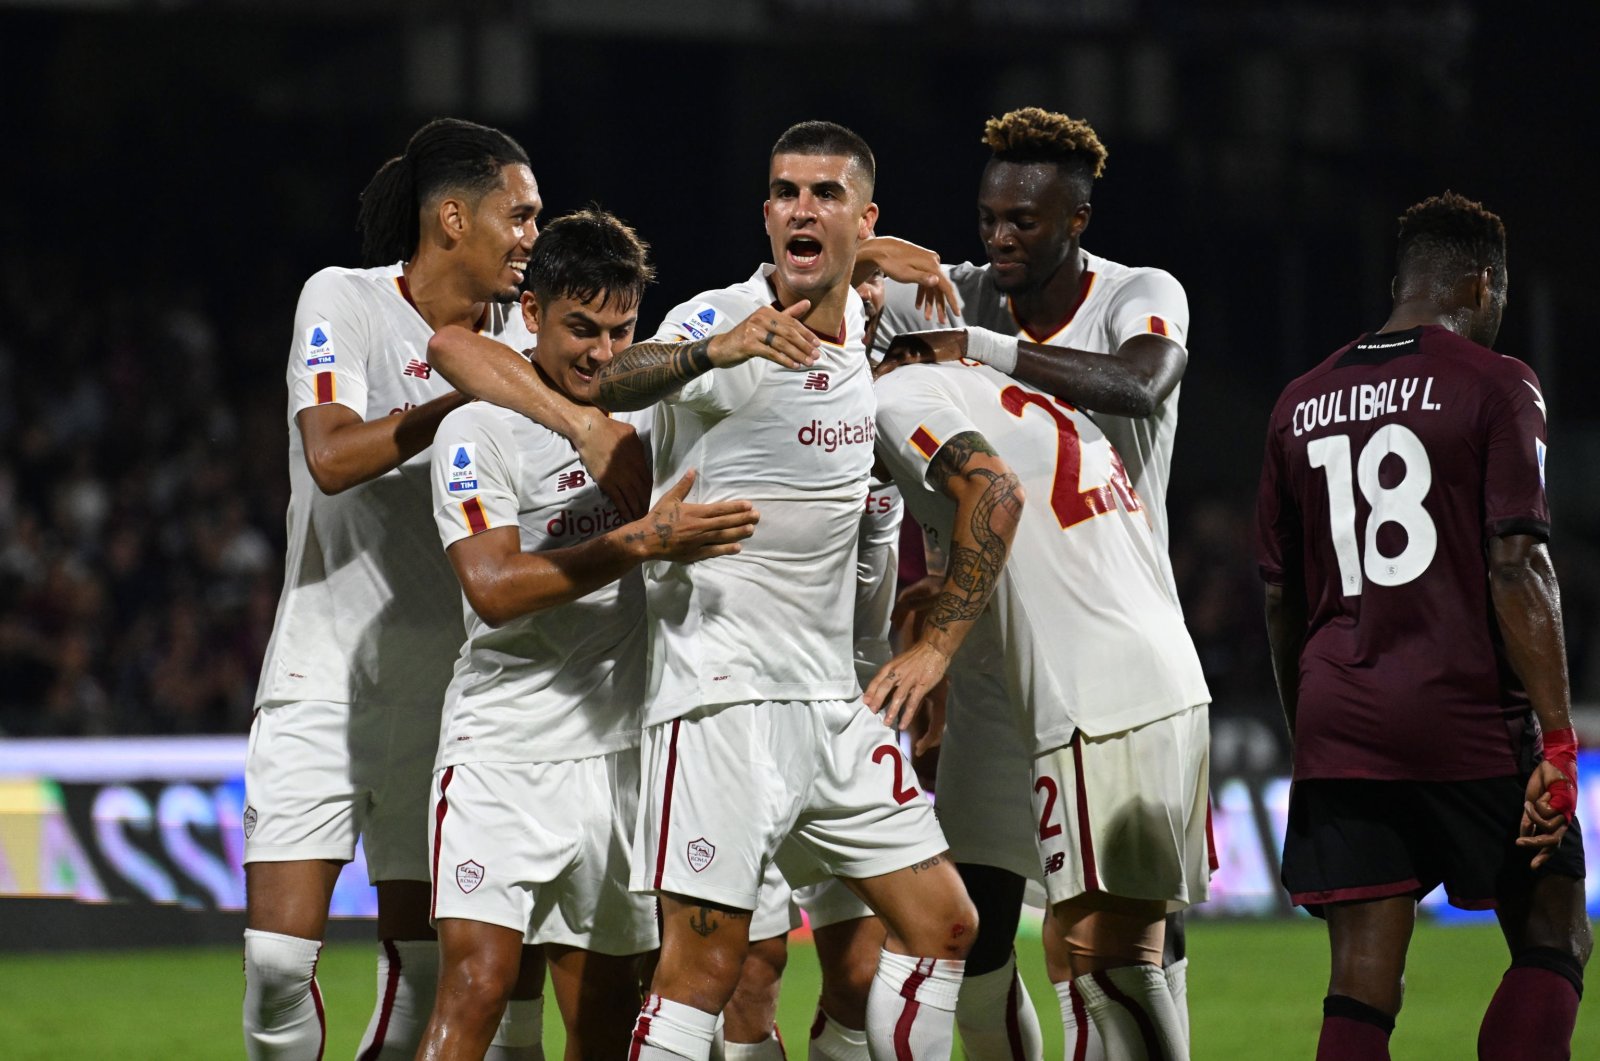 Roma players celebrate a goal in a Serie A match against Salernitana, Salerno, Italy, Aug. 14, 2022. (EPA Photo)